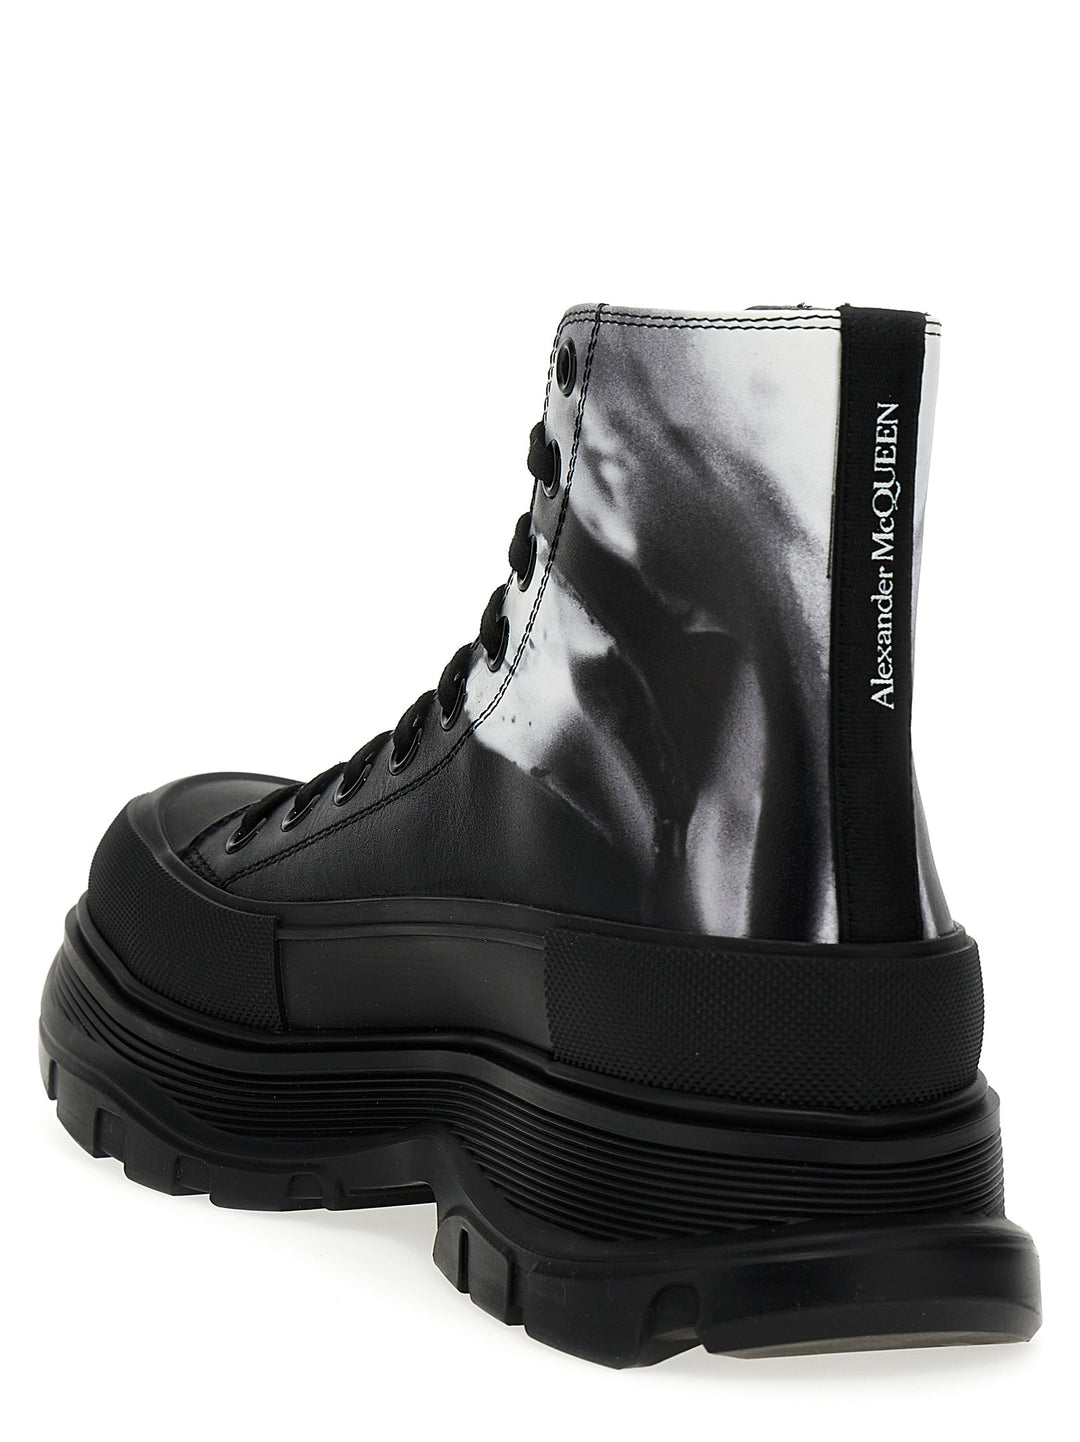 Tread Slick Solarised Flower Ankle Boots Stivali E Stivaletti Bianco/Nero